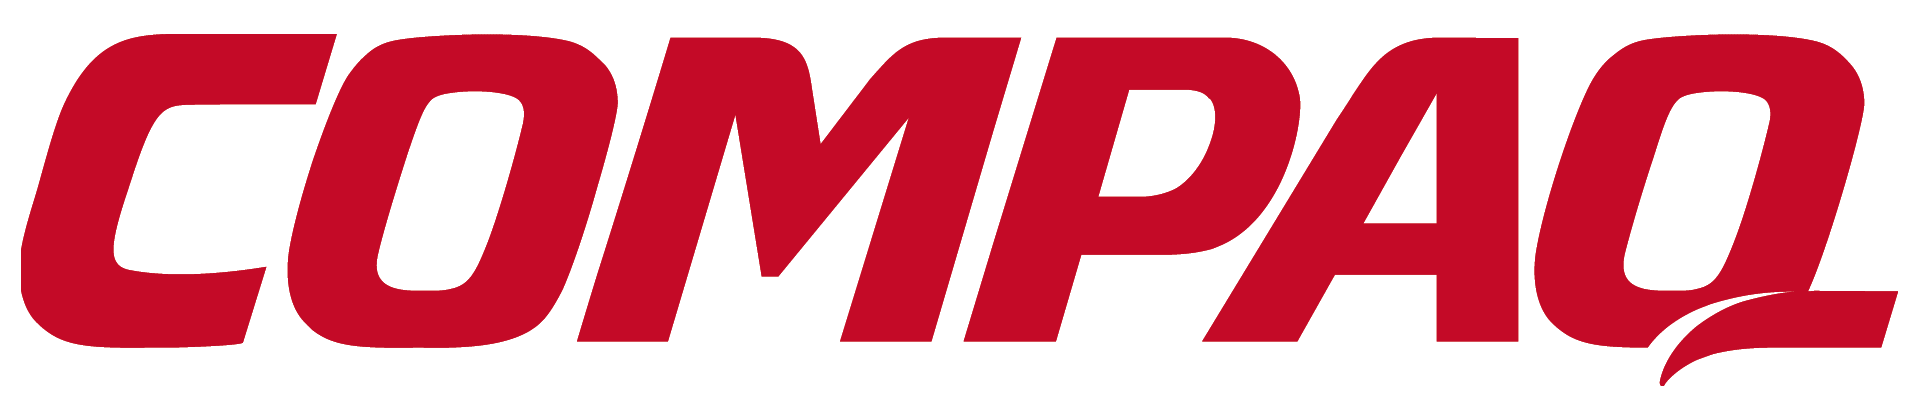 multitech Logo photo - 1